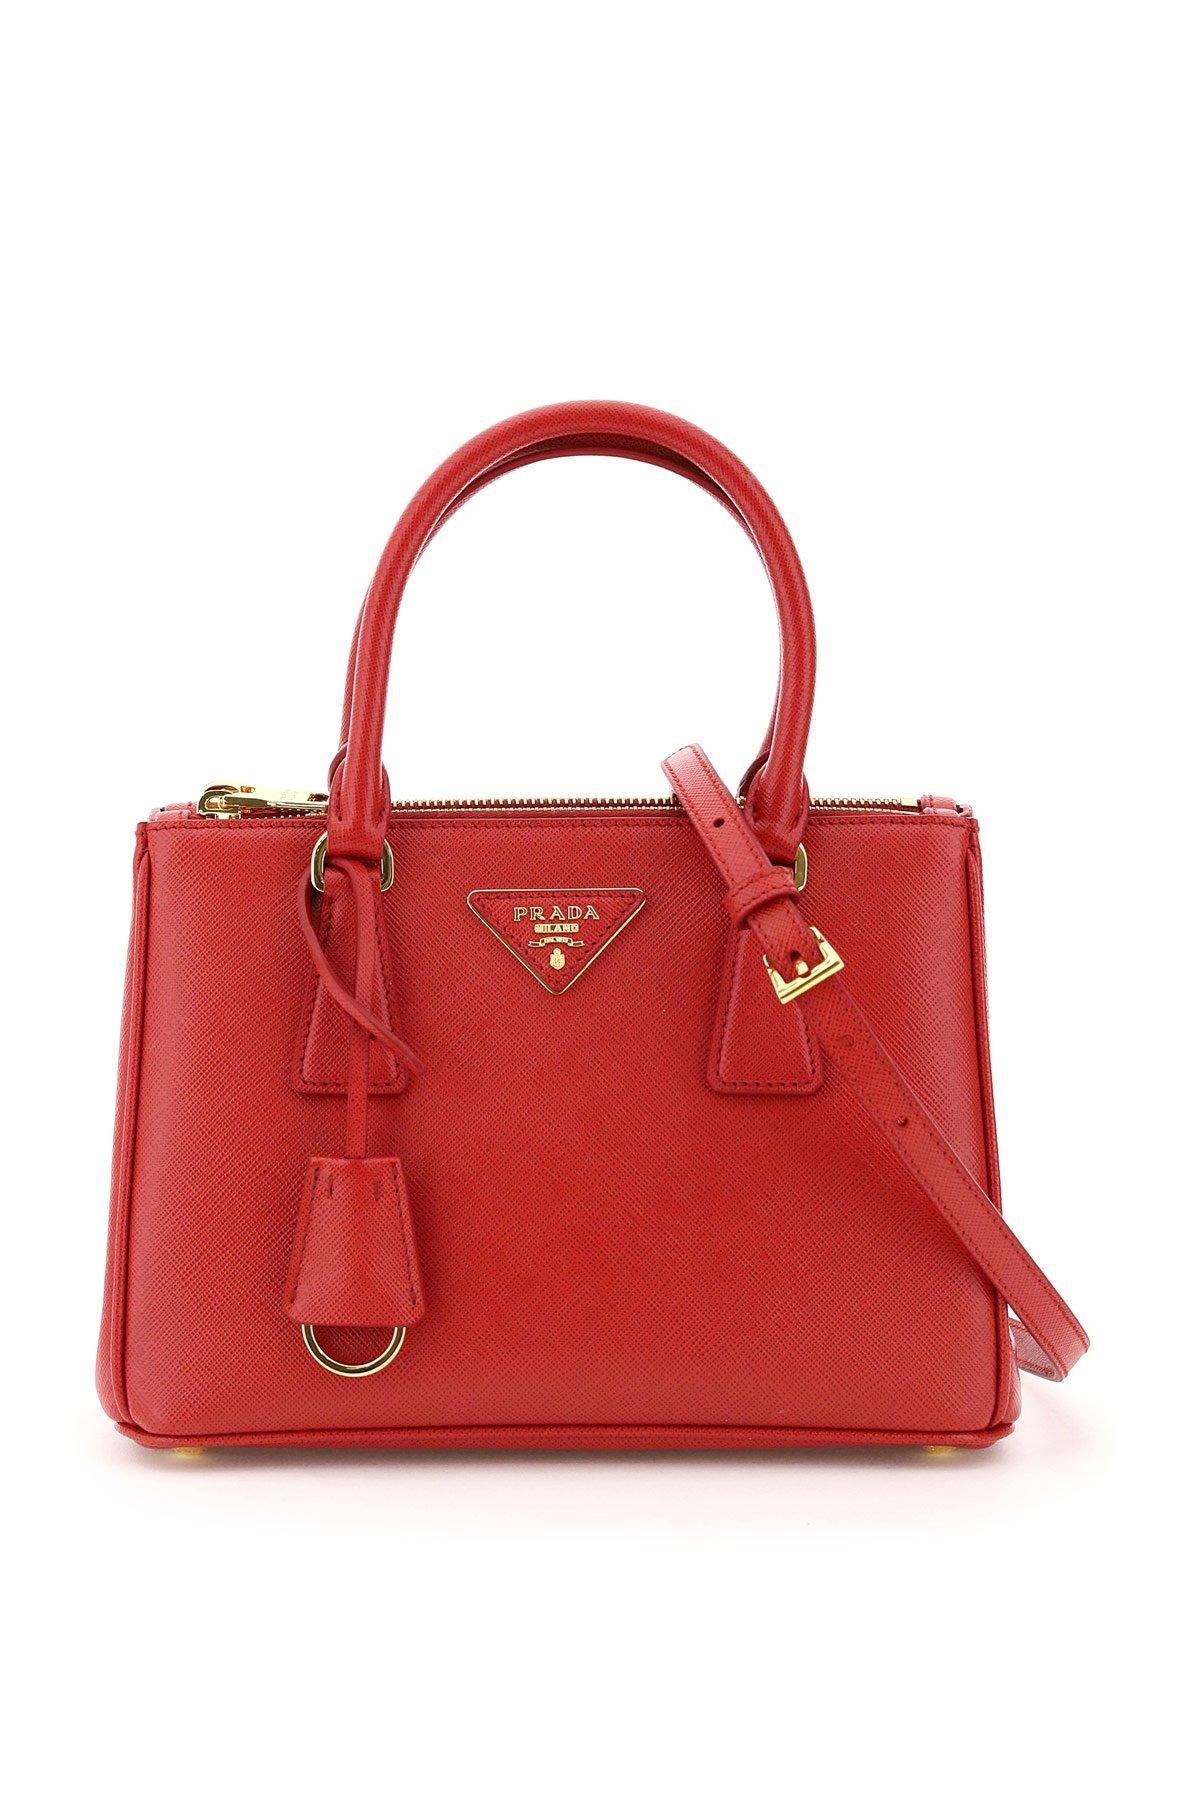 Prada Leather Saffiano Lux Galleria Bag in Red - Lyst